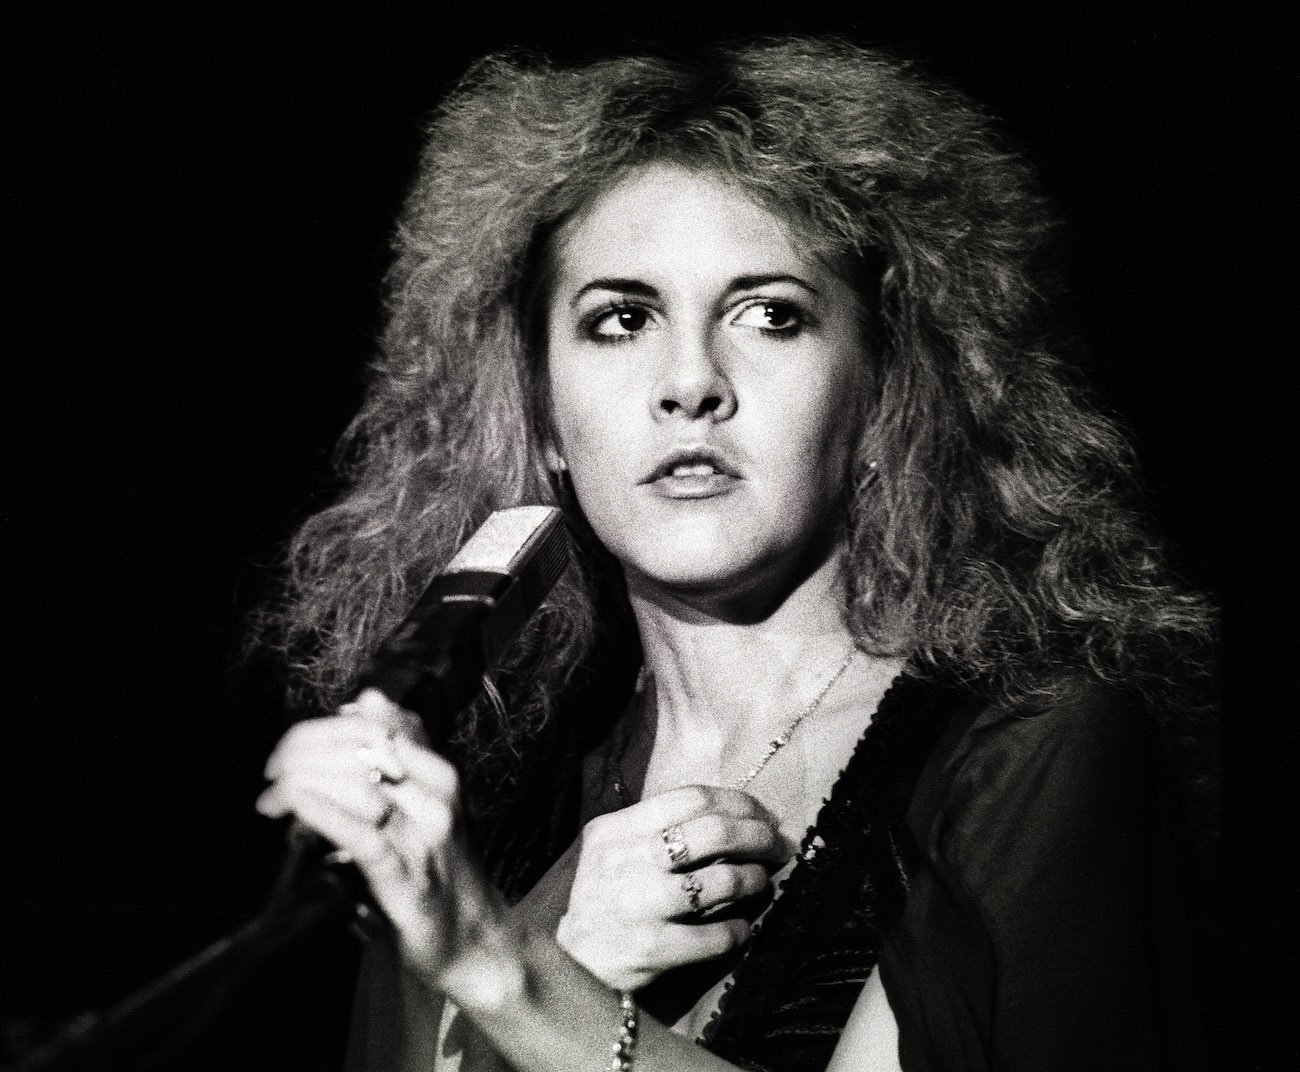 Stevie Nicks performing with Fleetwood Mac in Netherlands, 1980.